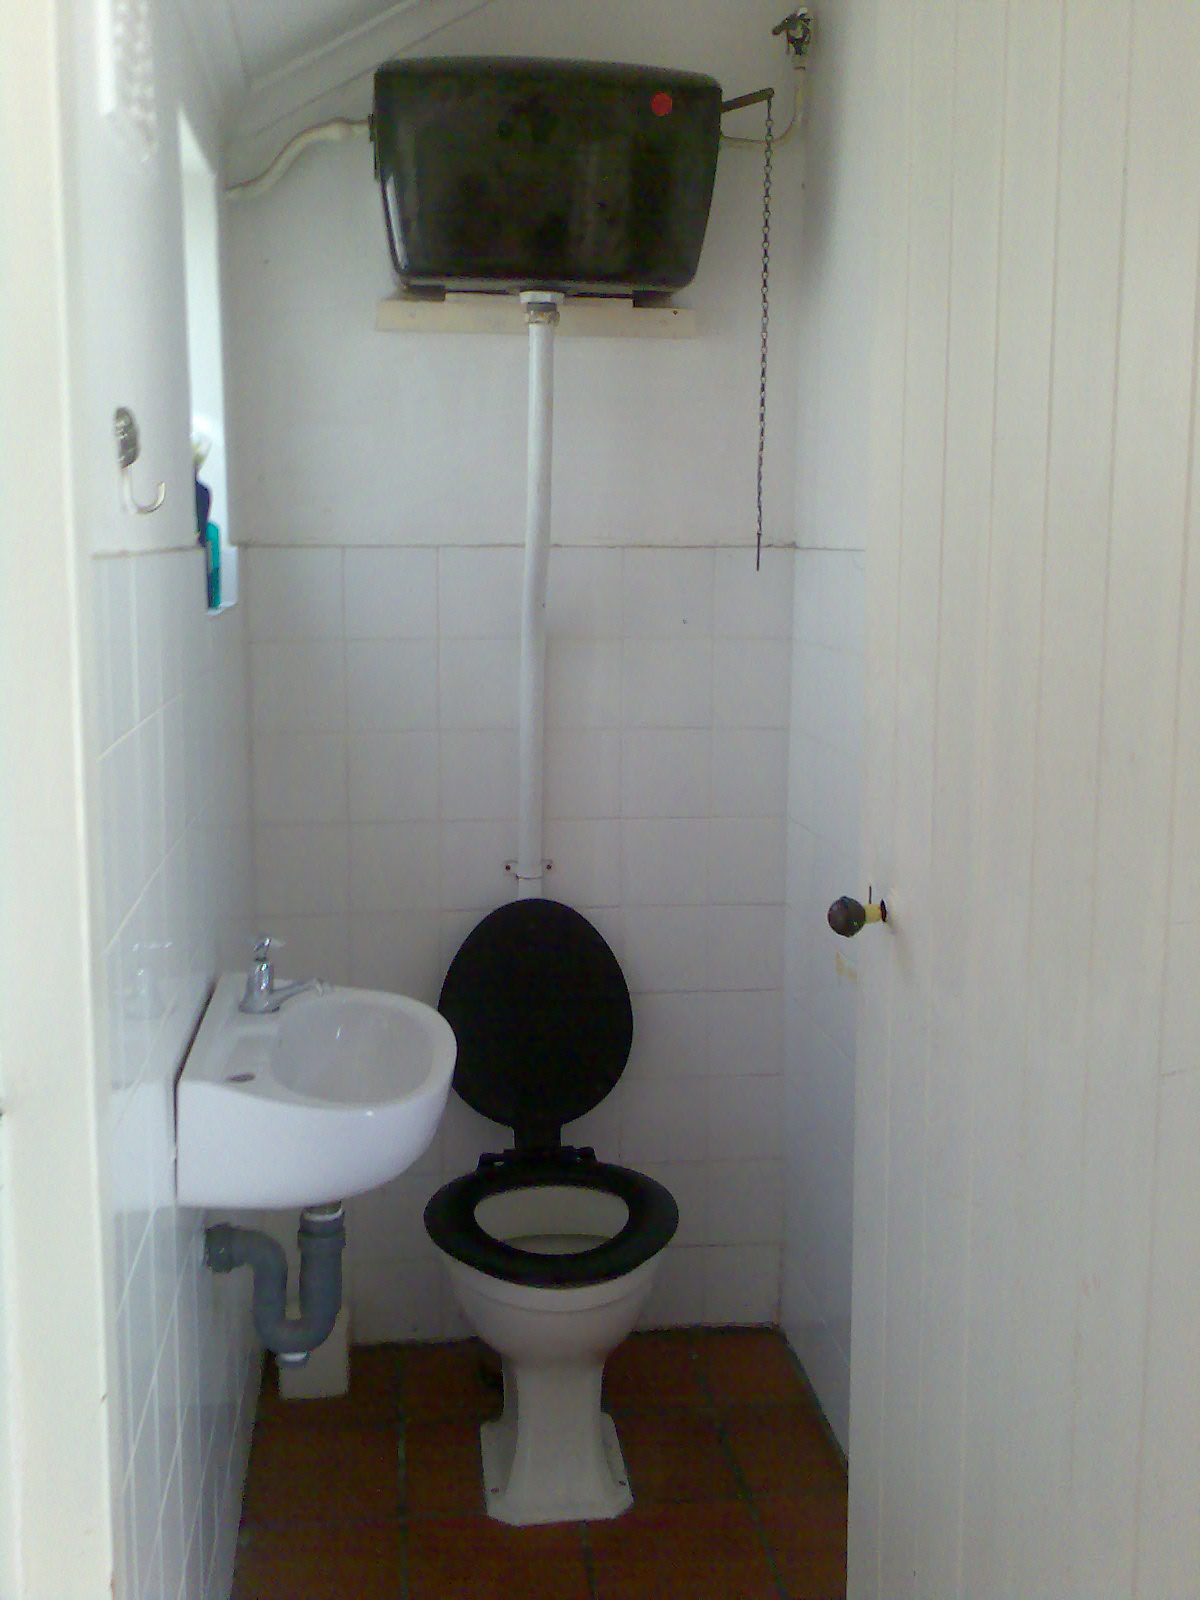 Toilet | Wikidwelling | FANDOM powered by Wikia